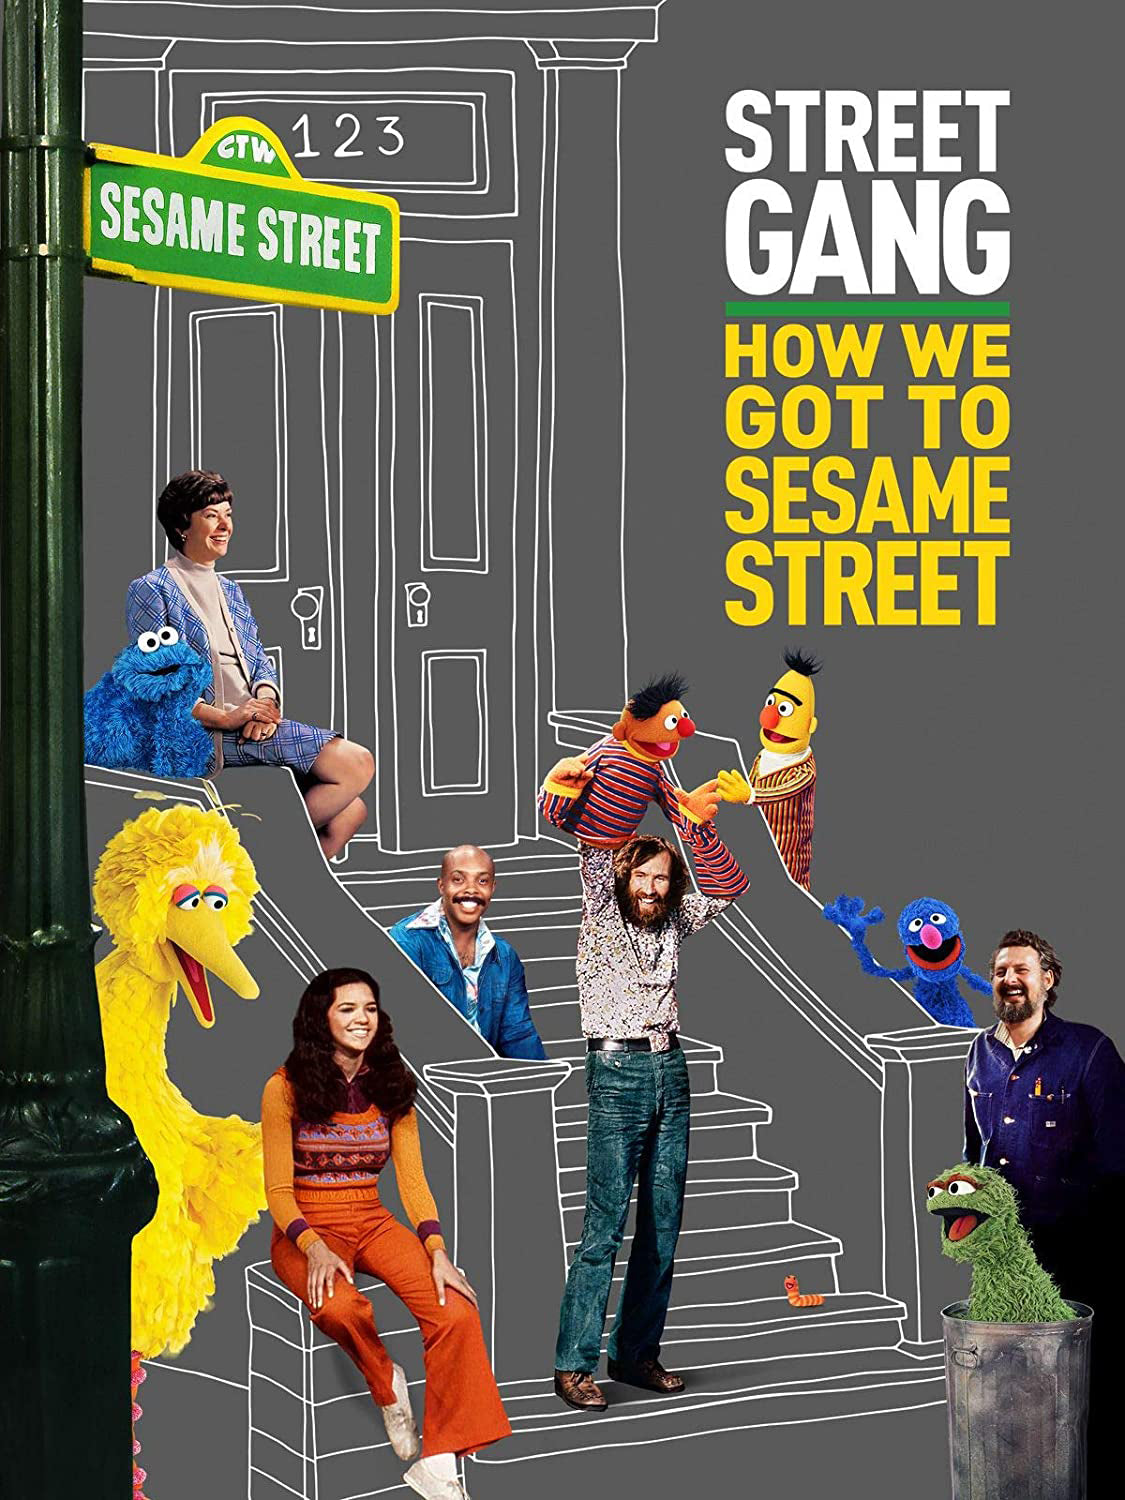 Street Gang: How We Got to Sesame Street [Blu-ray] cover art